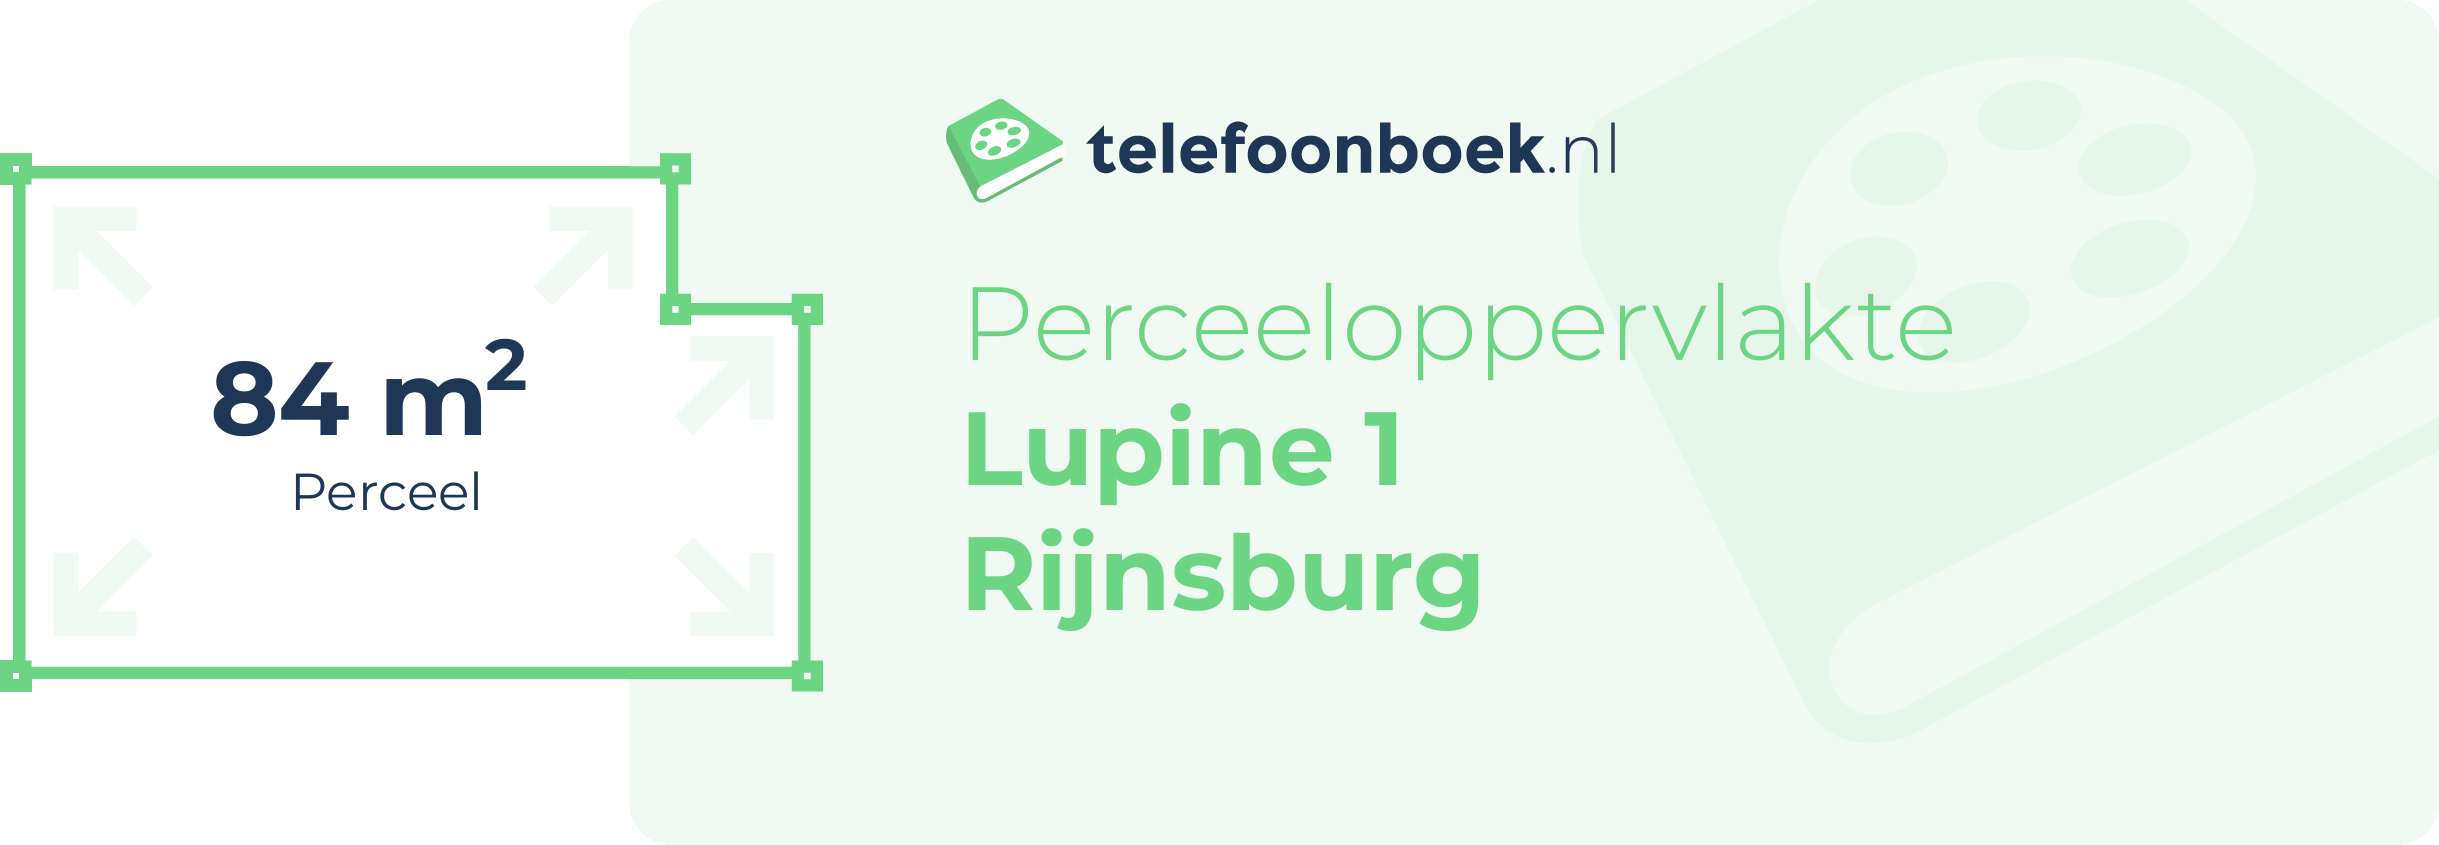 Perceeloppervlakte Lupine 1 Rijnsburg